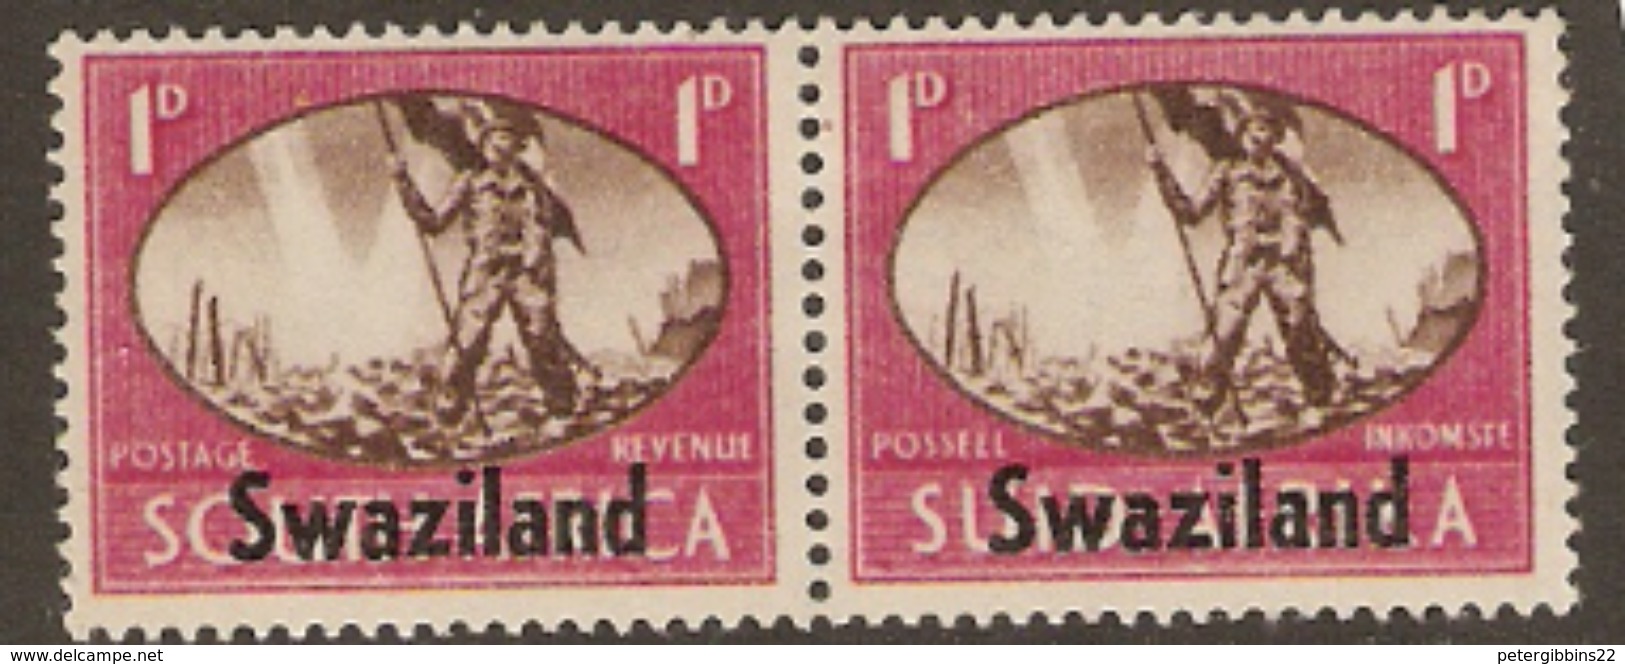 Swaziland 1945 SG 39 1d Mounted Mint - Swaziland (...-1967)